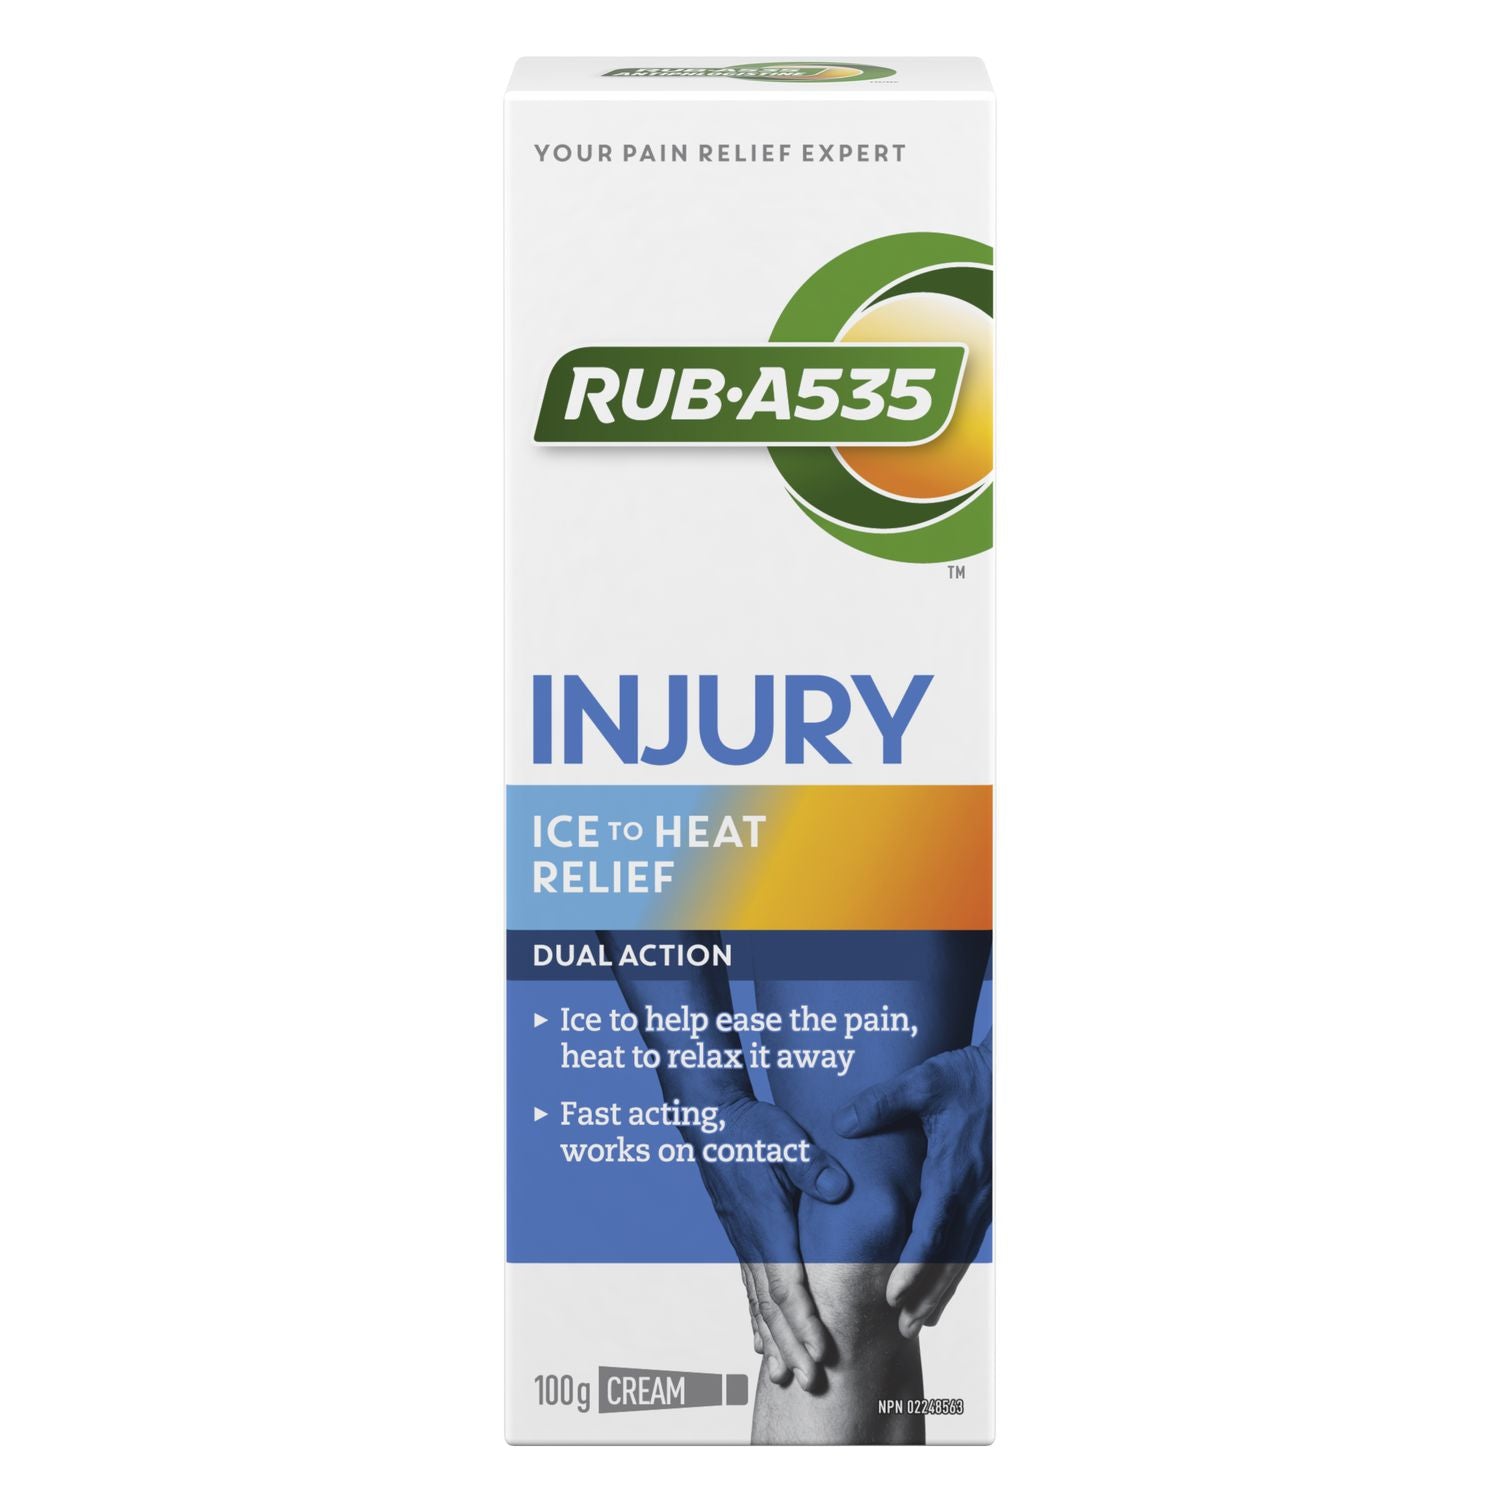 Rub-A535 Injury Ice to Heat Cream 100g